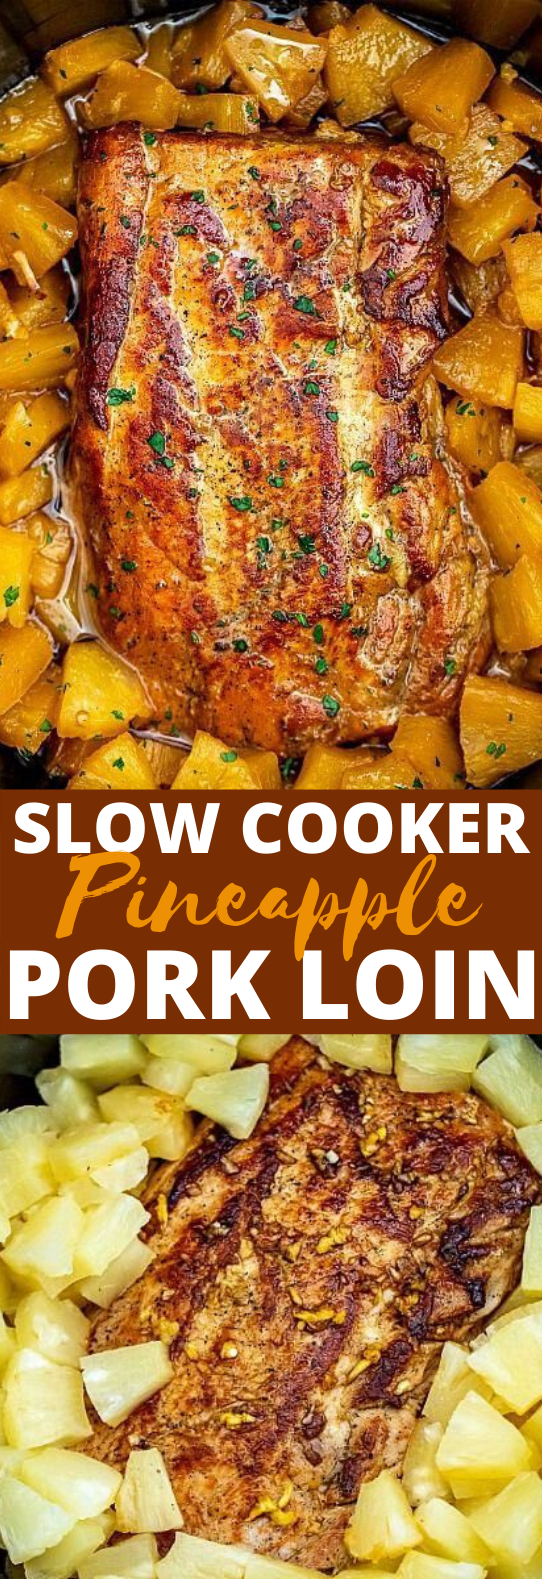 Slow Cooker Pineapple Pork Loin #dinner #slowcooker #pork #weeknight #meat